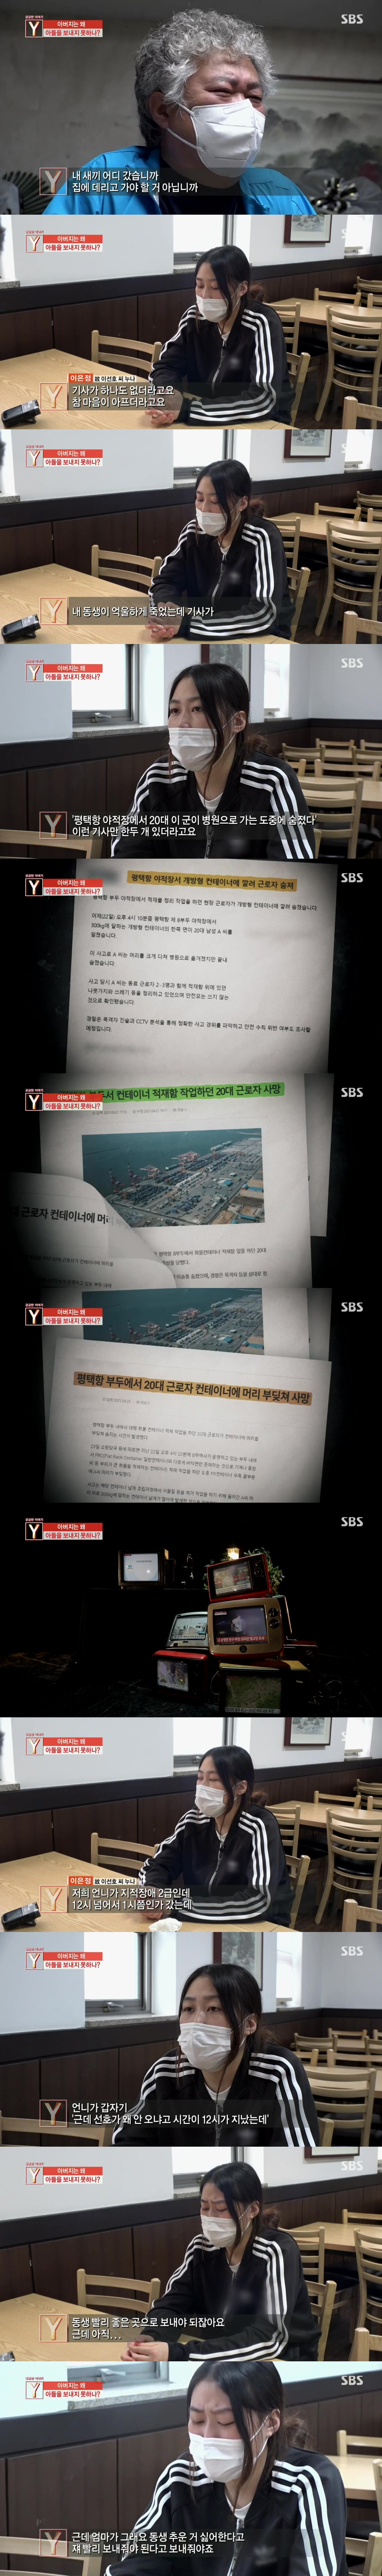 Curious story Y Pyeongtaek Port Lee Seonho incident